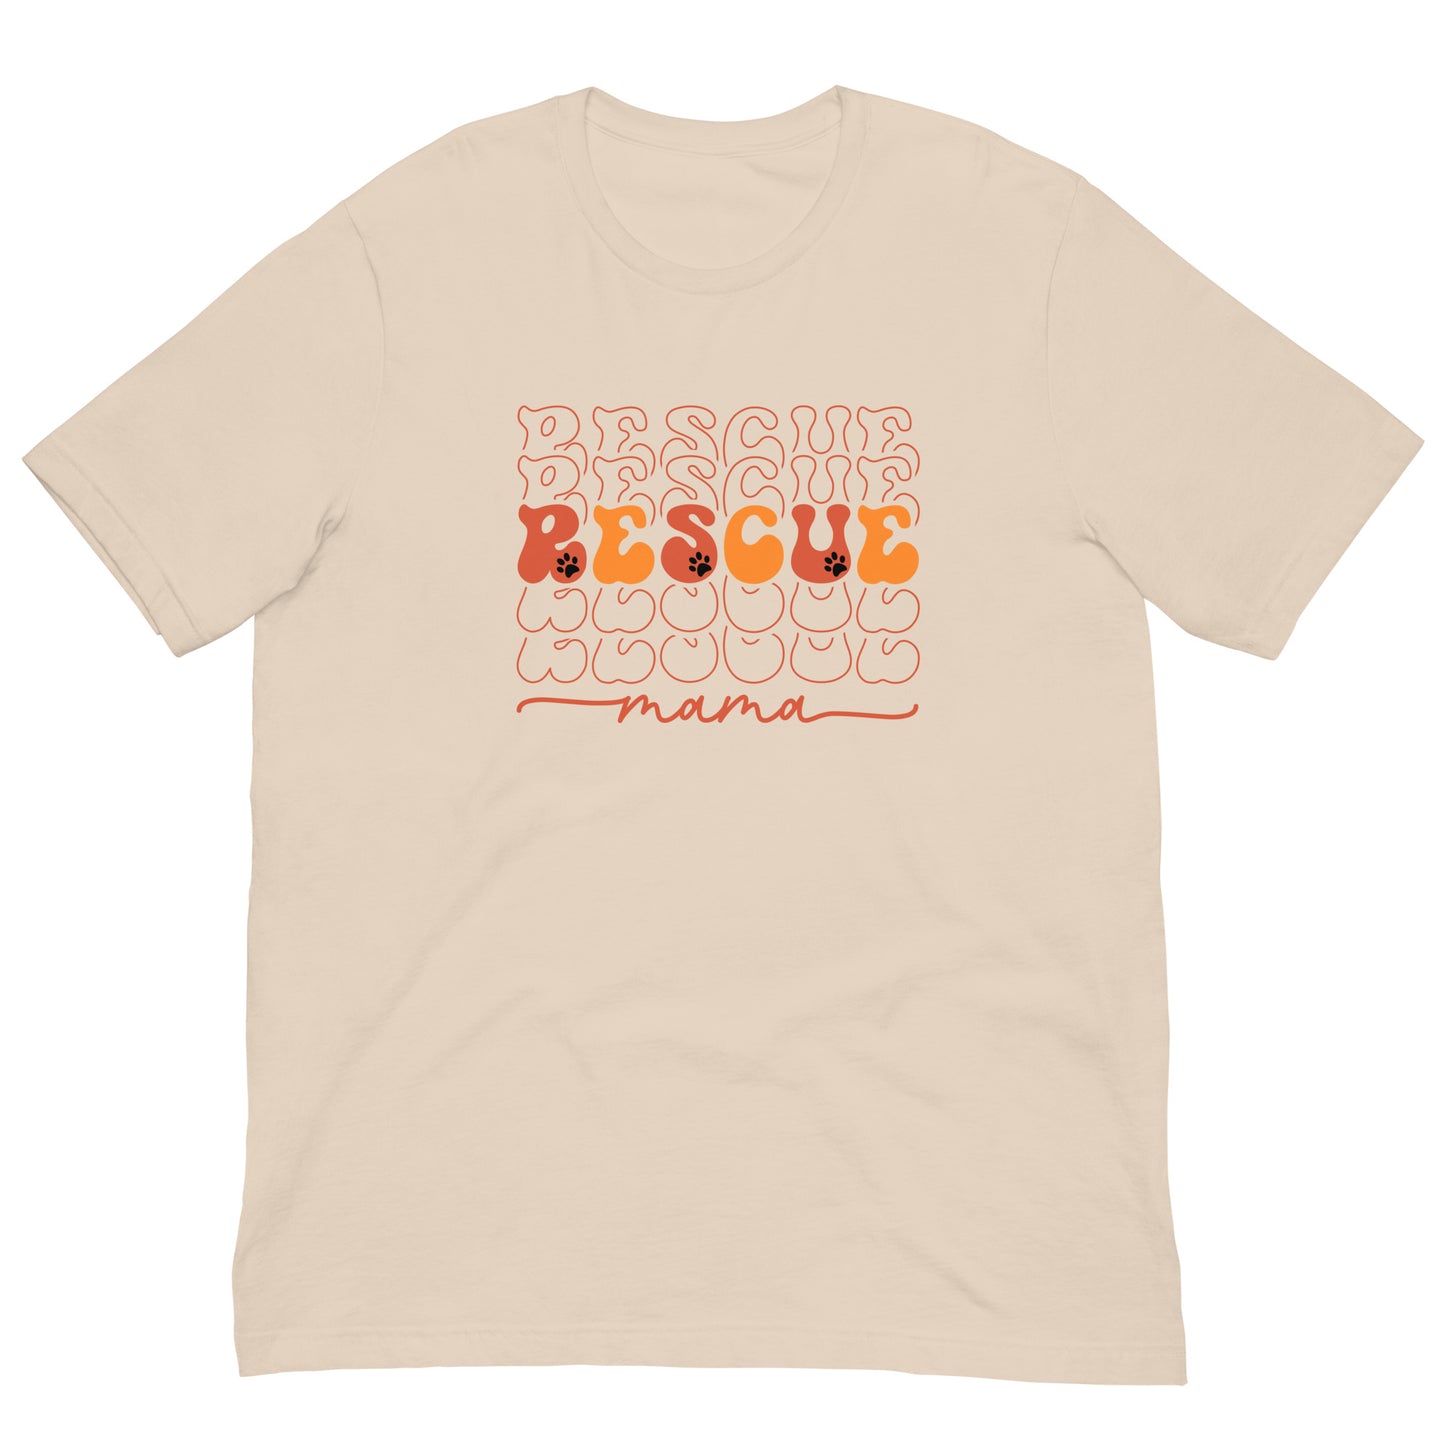 Rescue Mama t-shirt - Orange